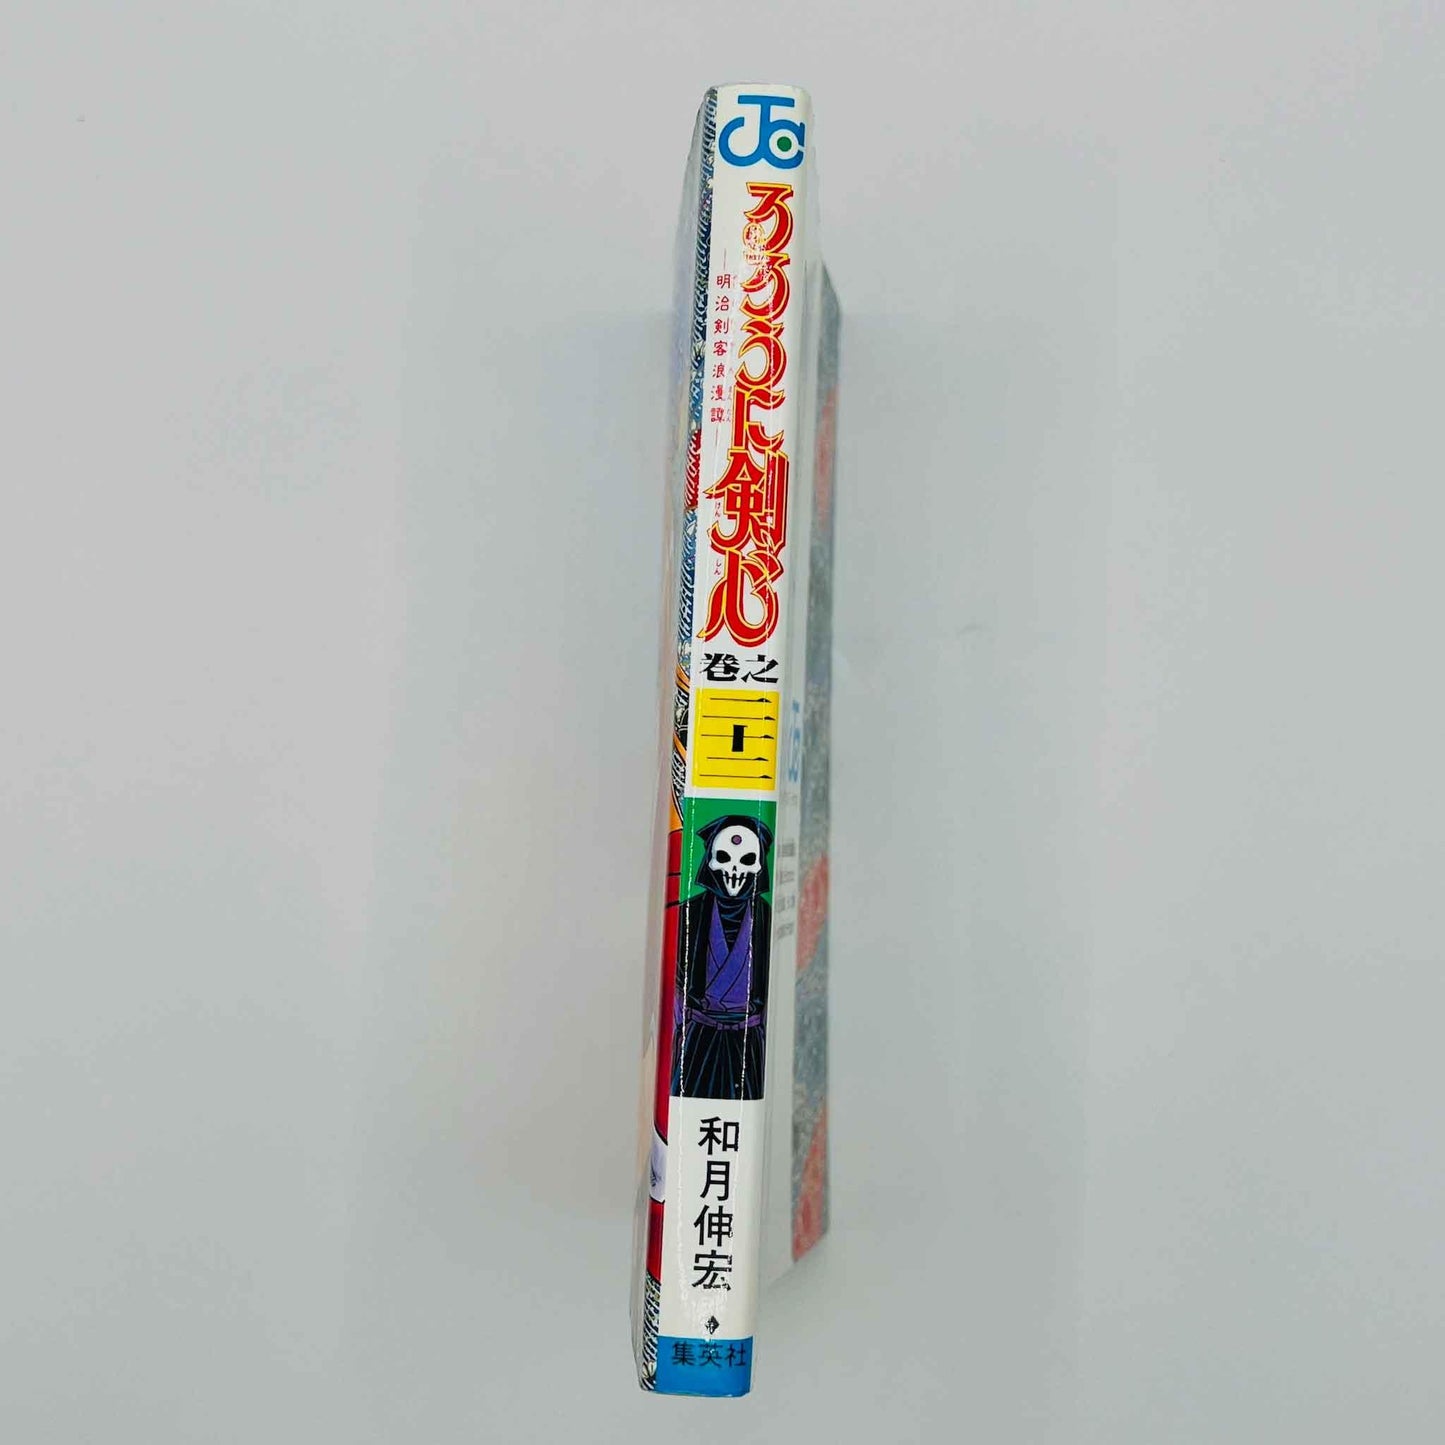 Rurouni Kenshin - Volume 22 - 1stPrint.net - 1st First Print Edition Manga Store - M-KENSH-22-001